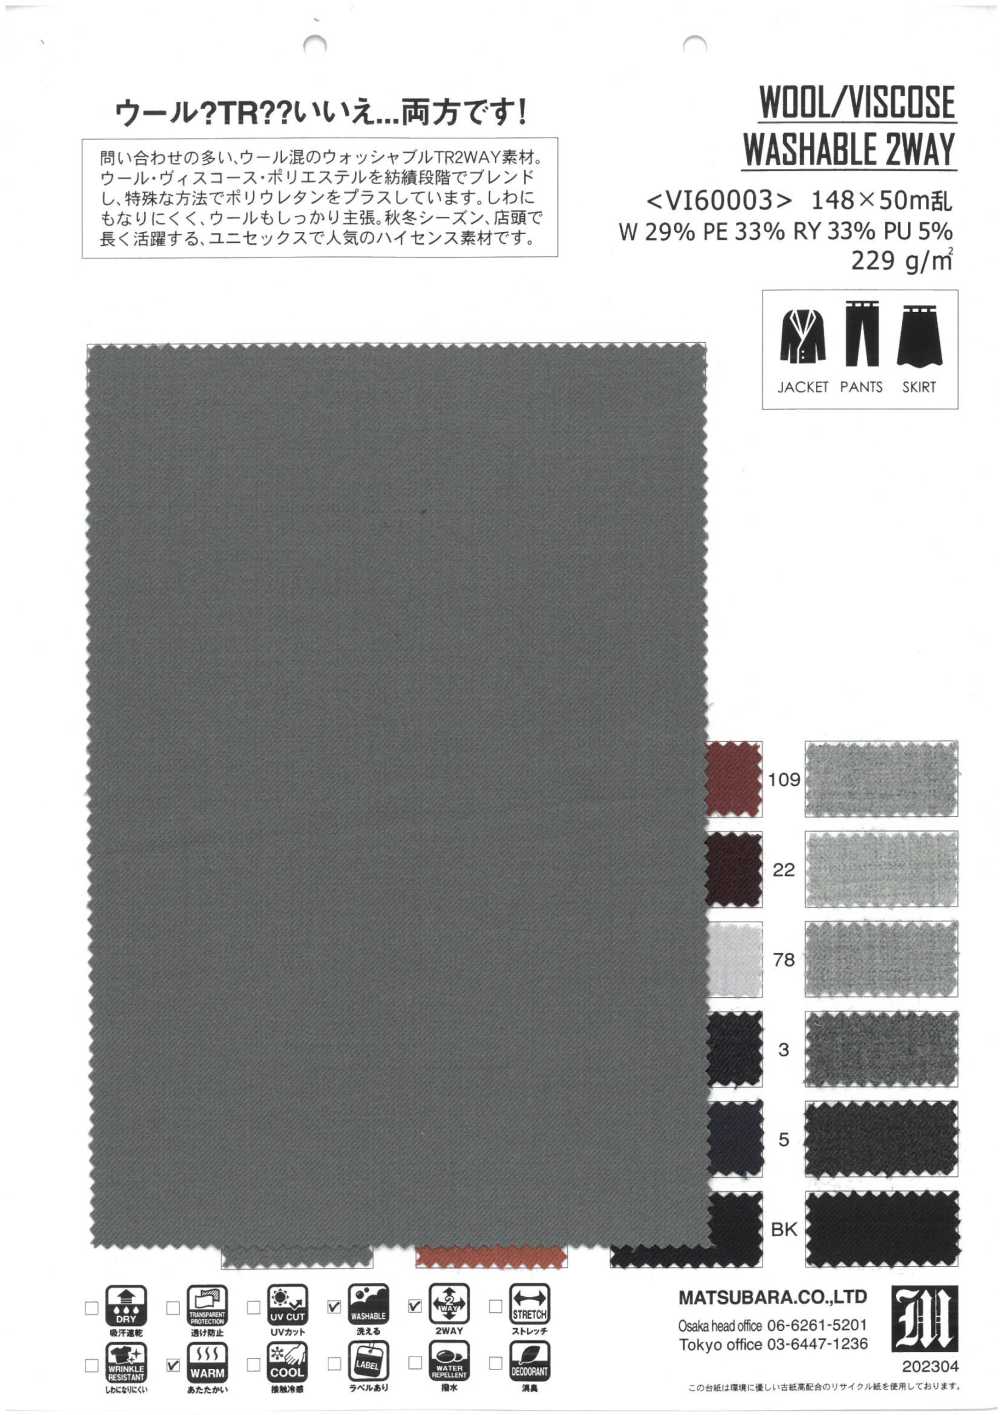 VI60003 WOOL/VISCOSE WASHABLE 2WAY[Textile / Fabric] Matsubara